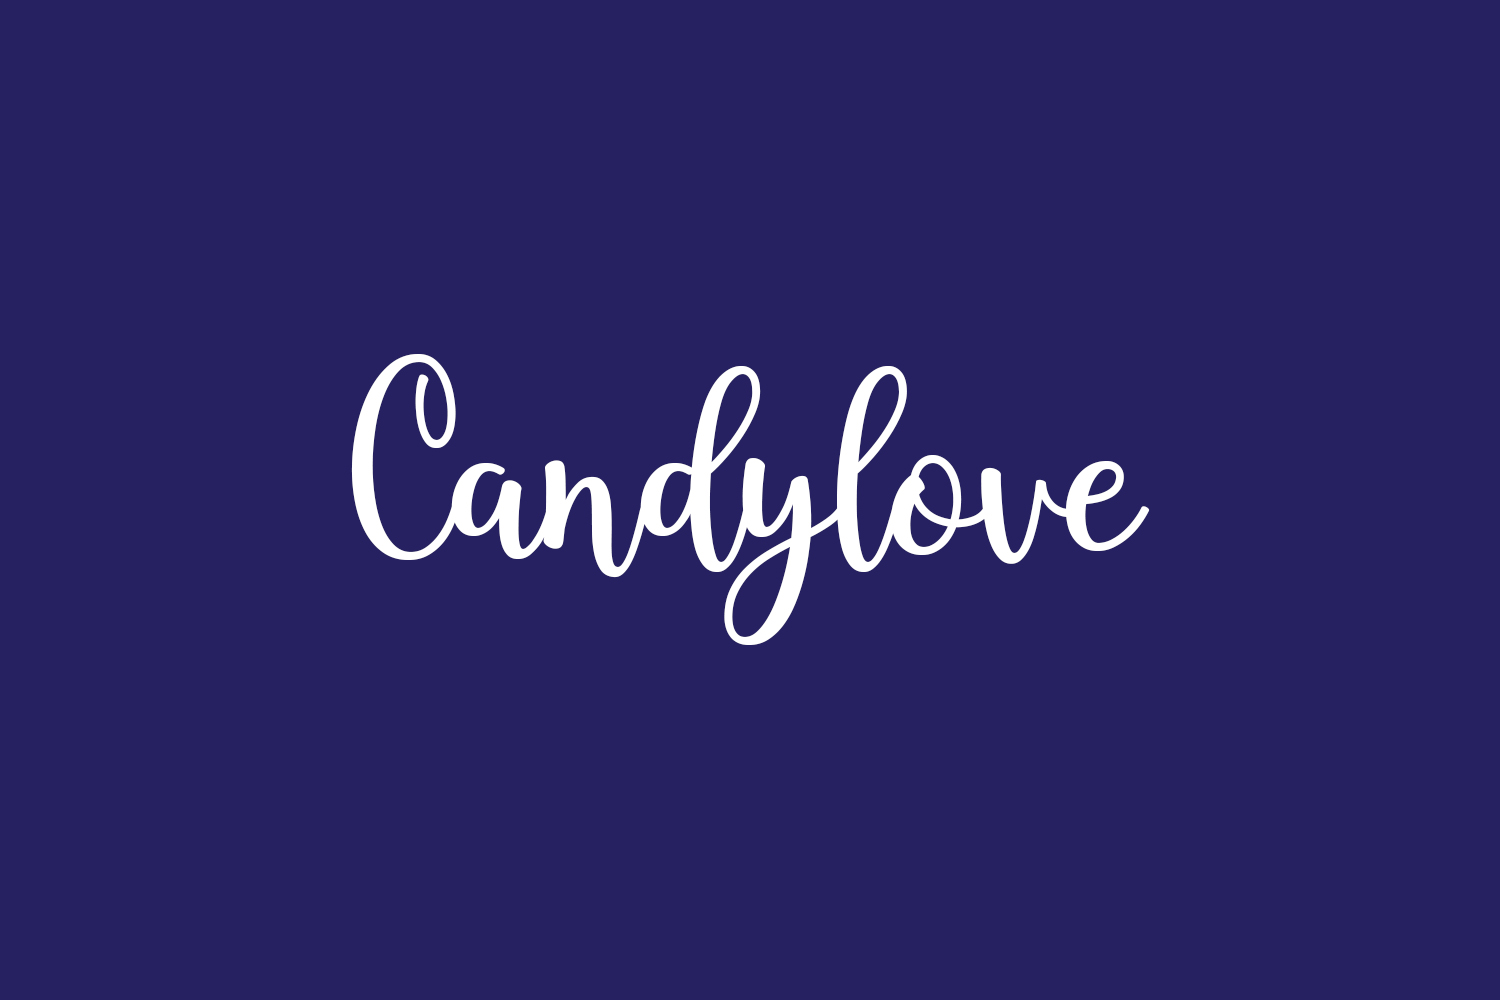 Candylove Free Font